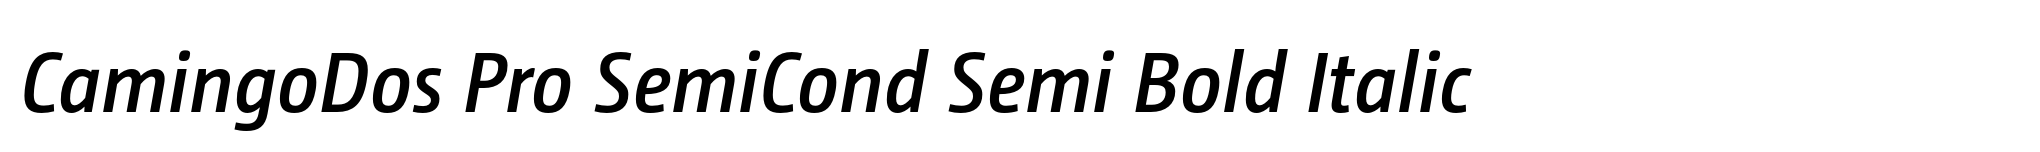 CamingoDos Pro SemiCond Semi Bold Italic image